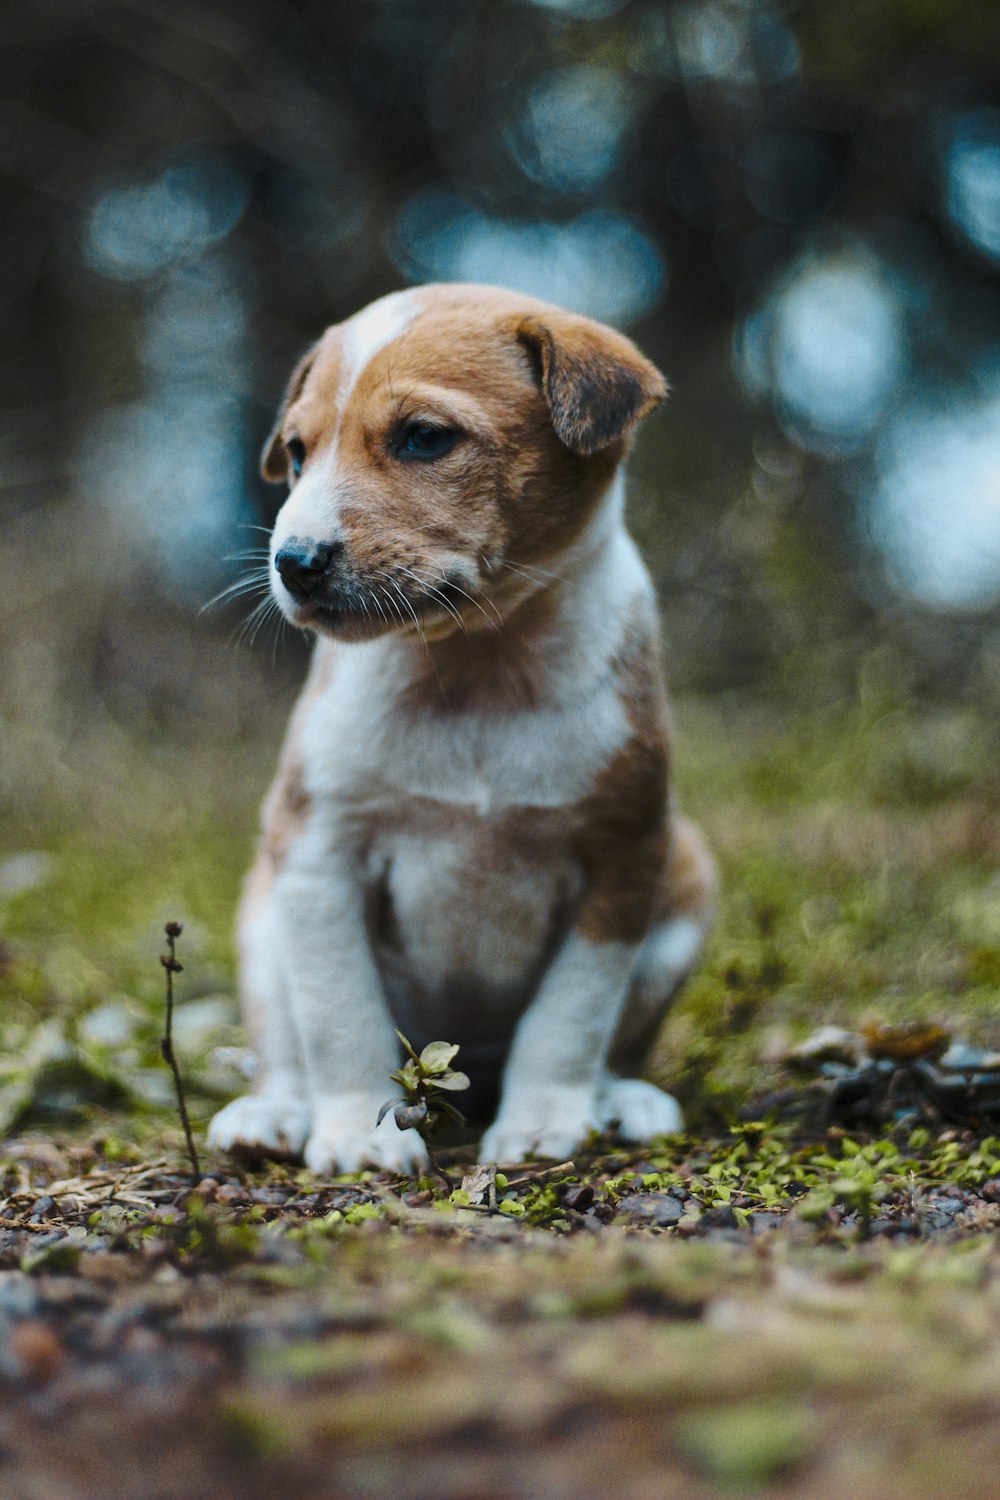 a puppy standing on grass